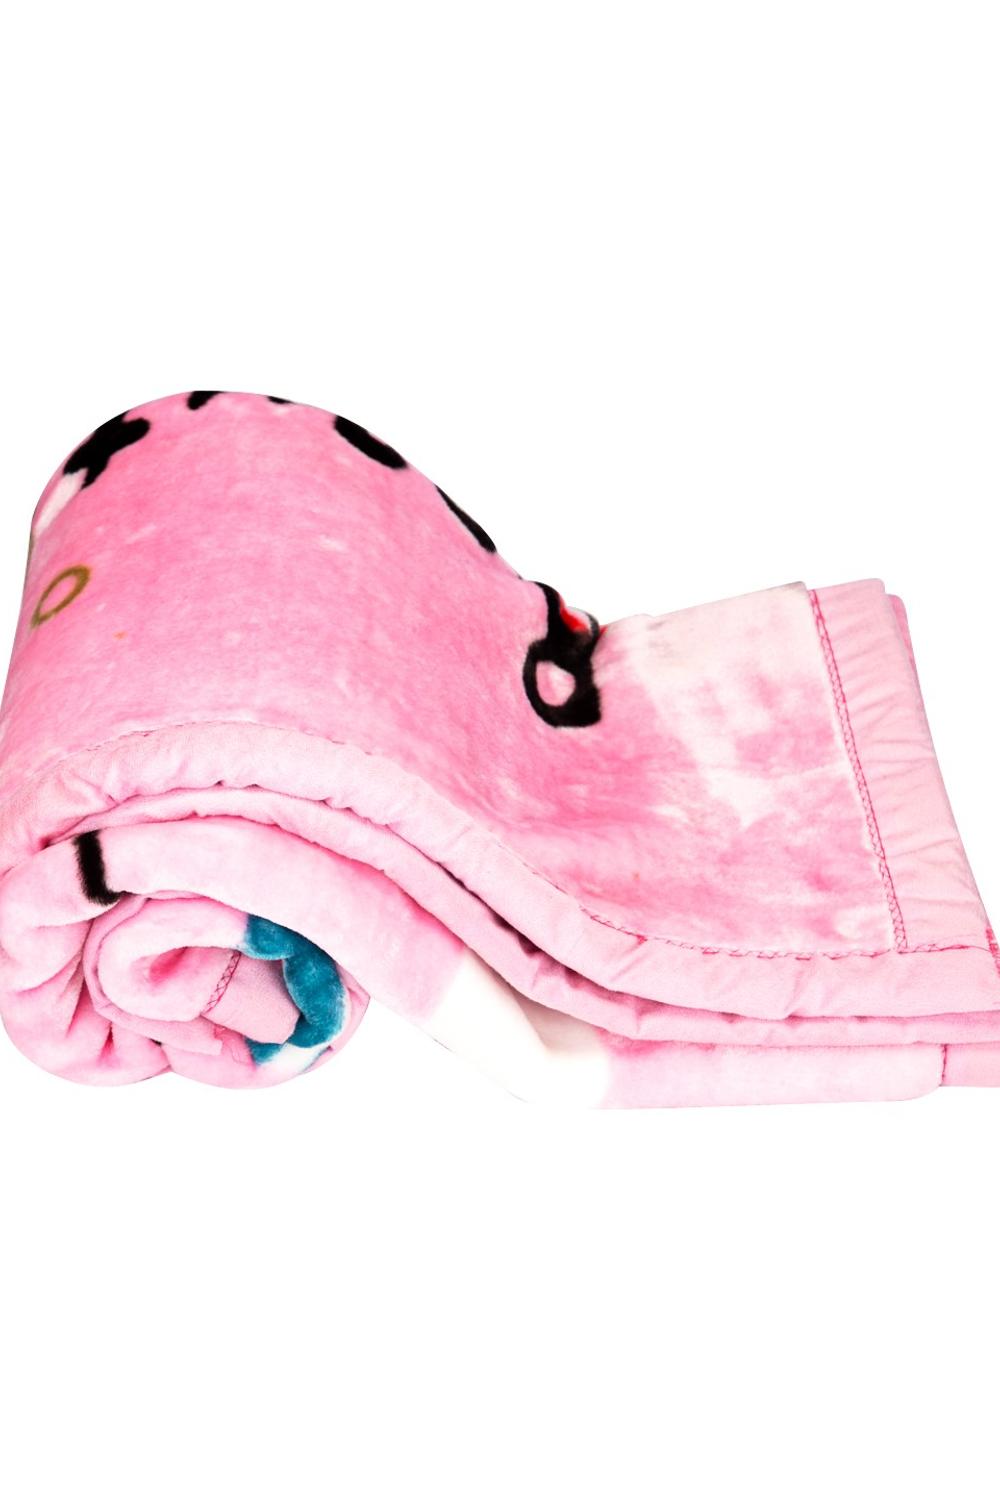 Mee Mee Soft Baby Blanket (Pink)